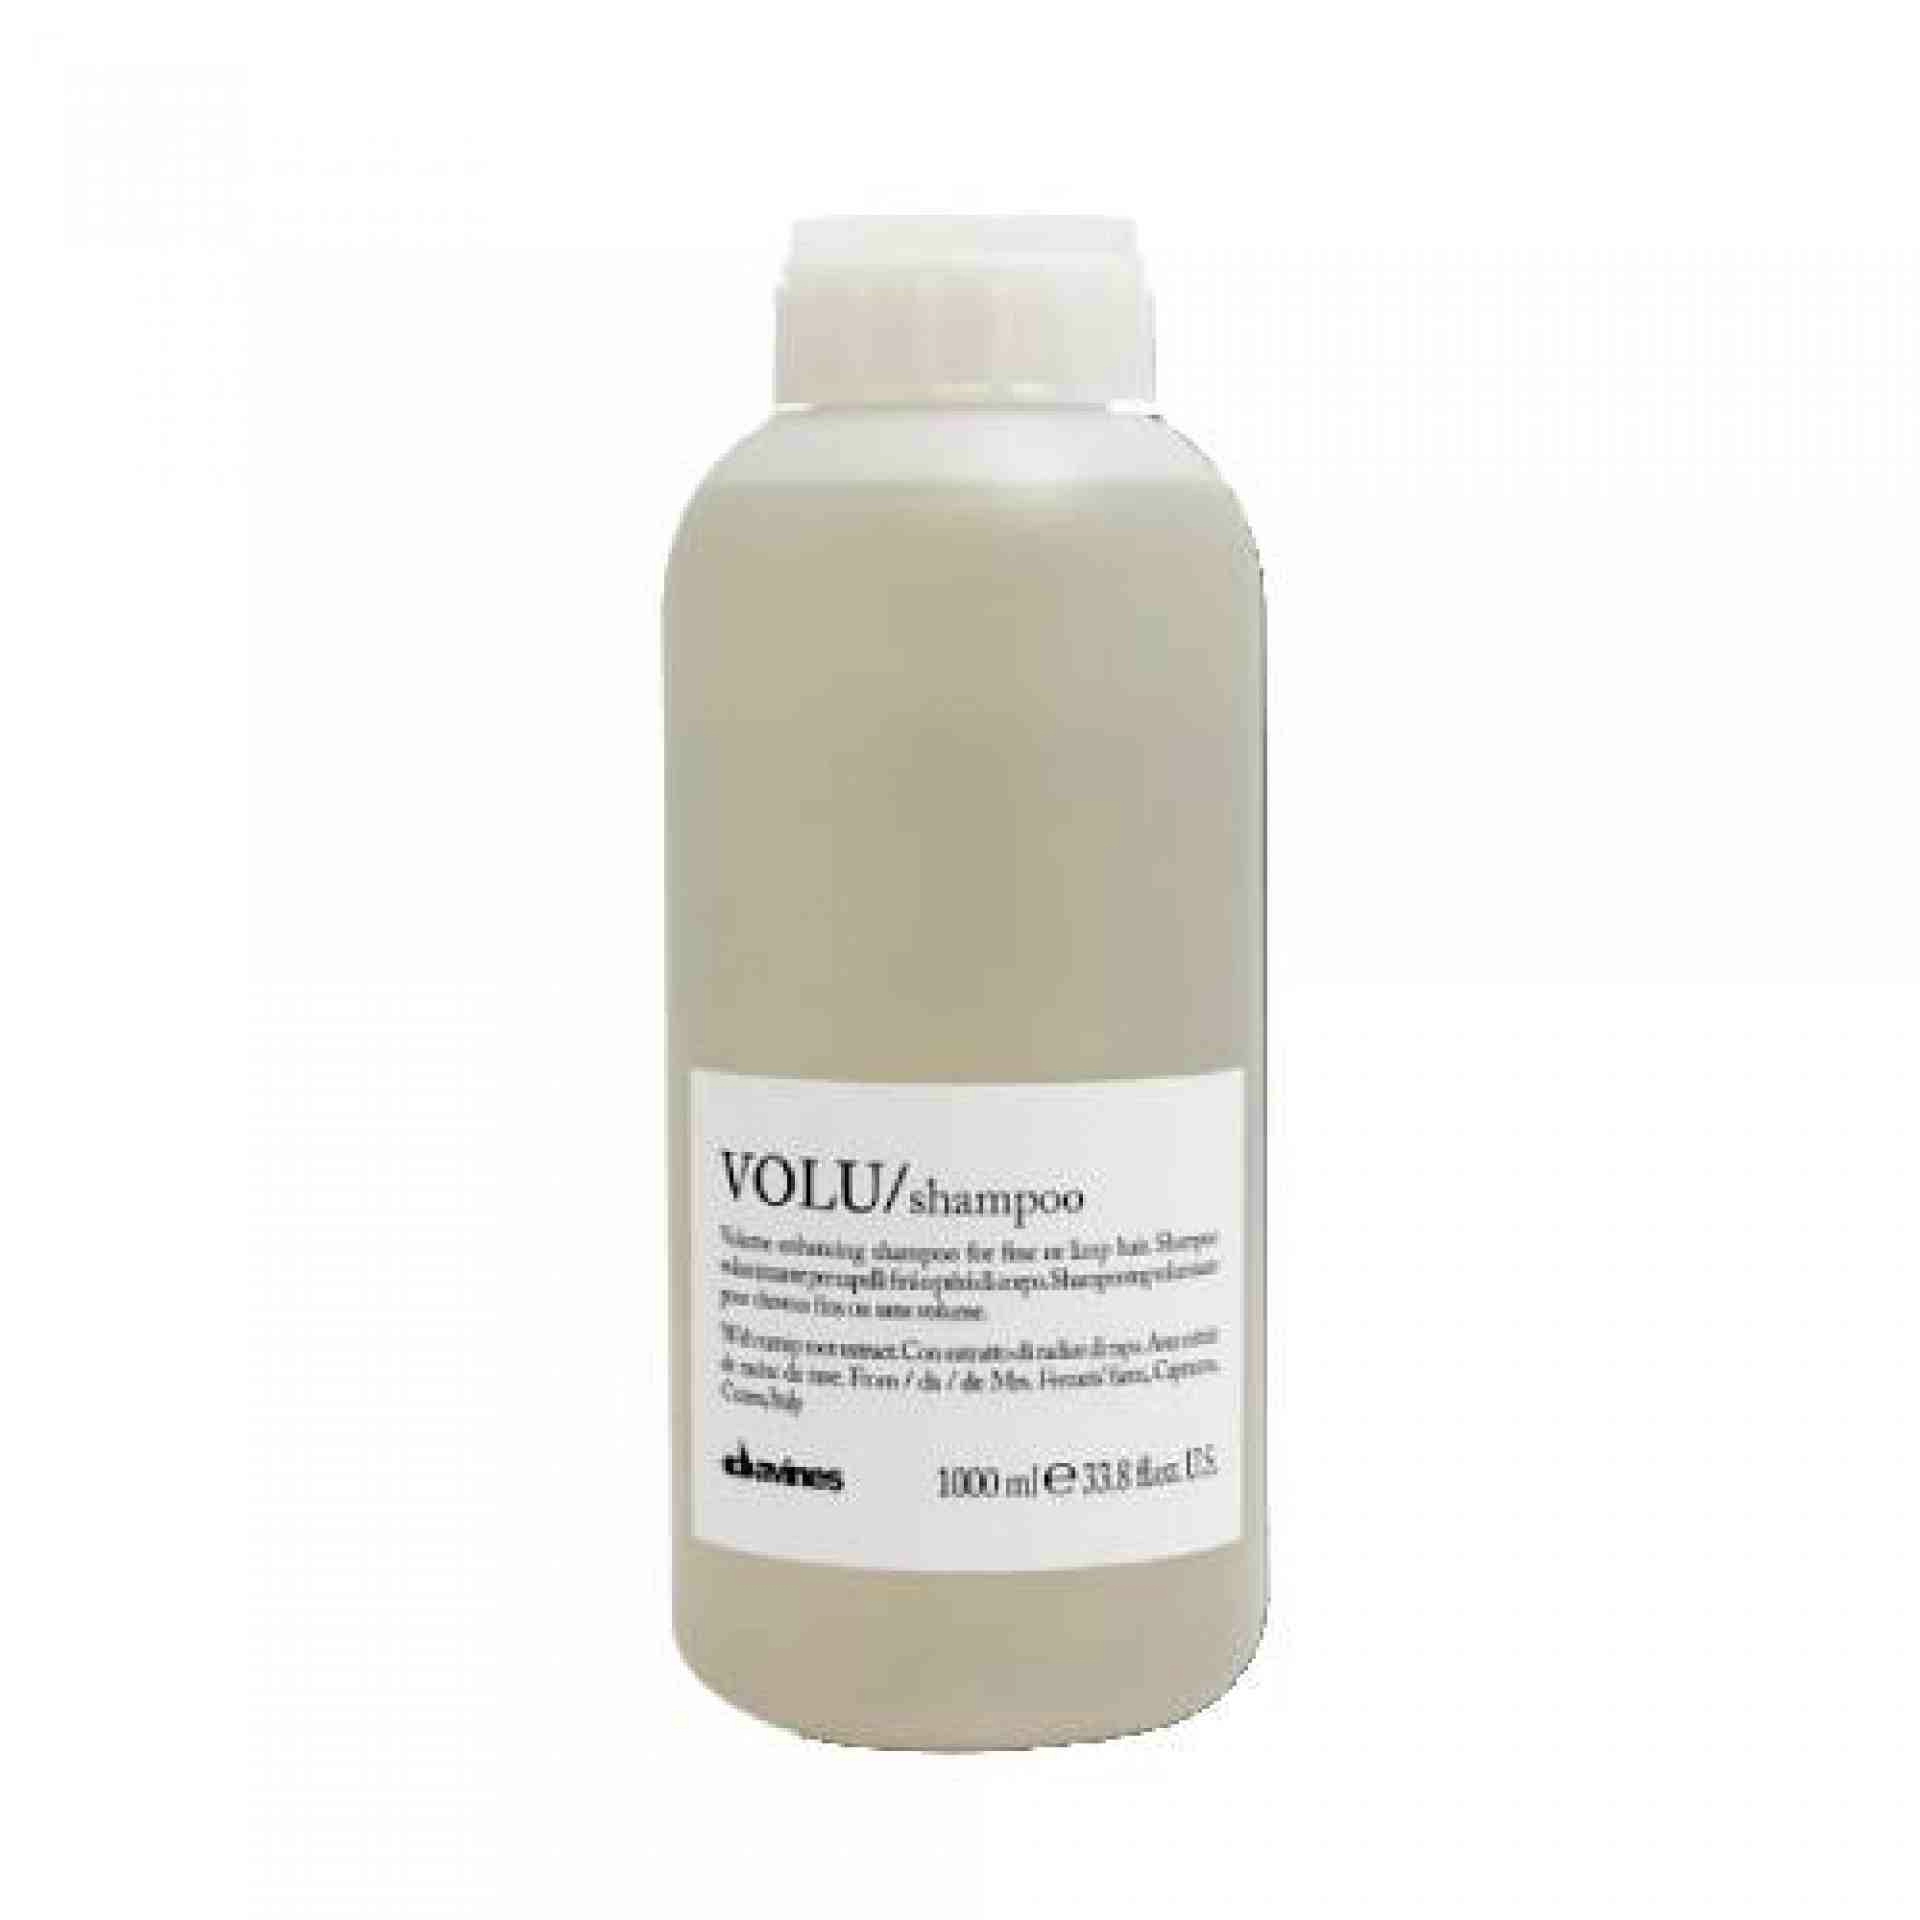 VOLU / Shampoo | Champú efecto volumen - Essential Haircare - Davines ®